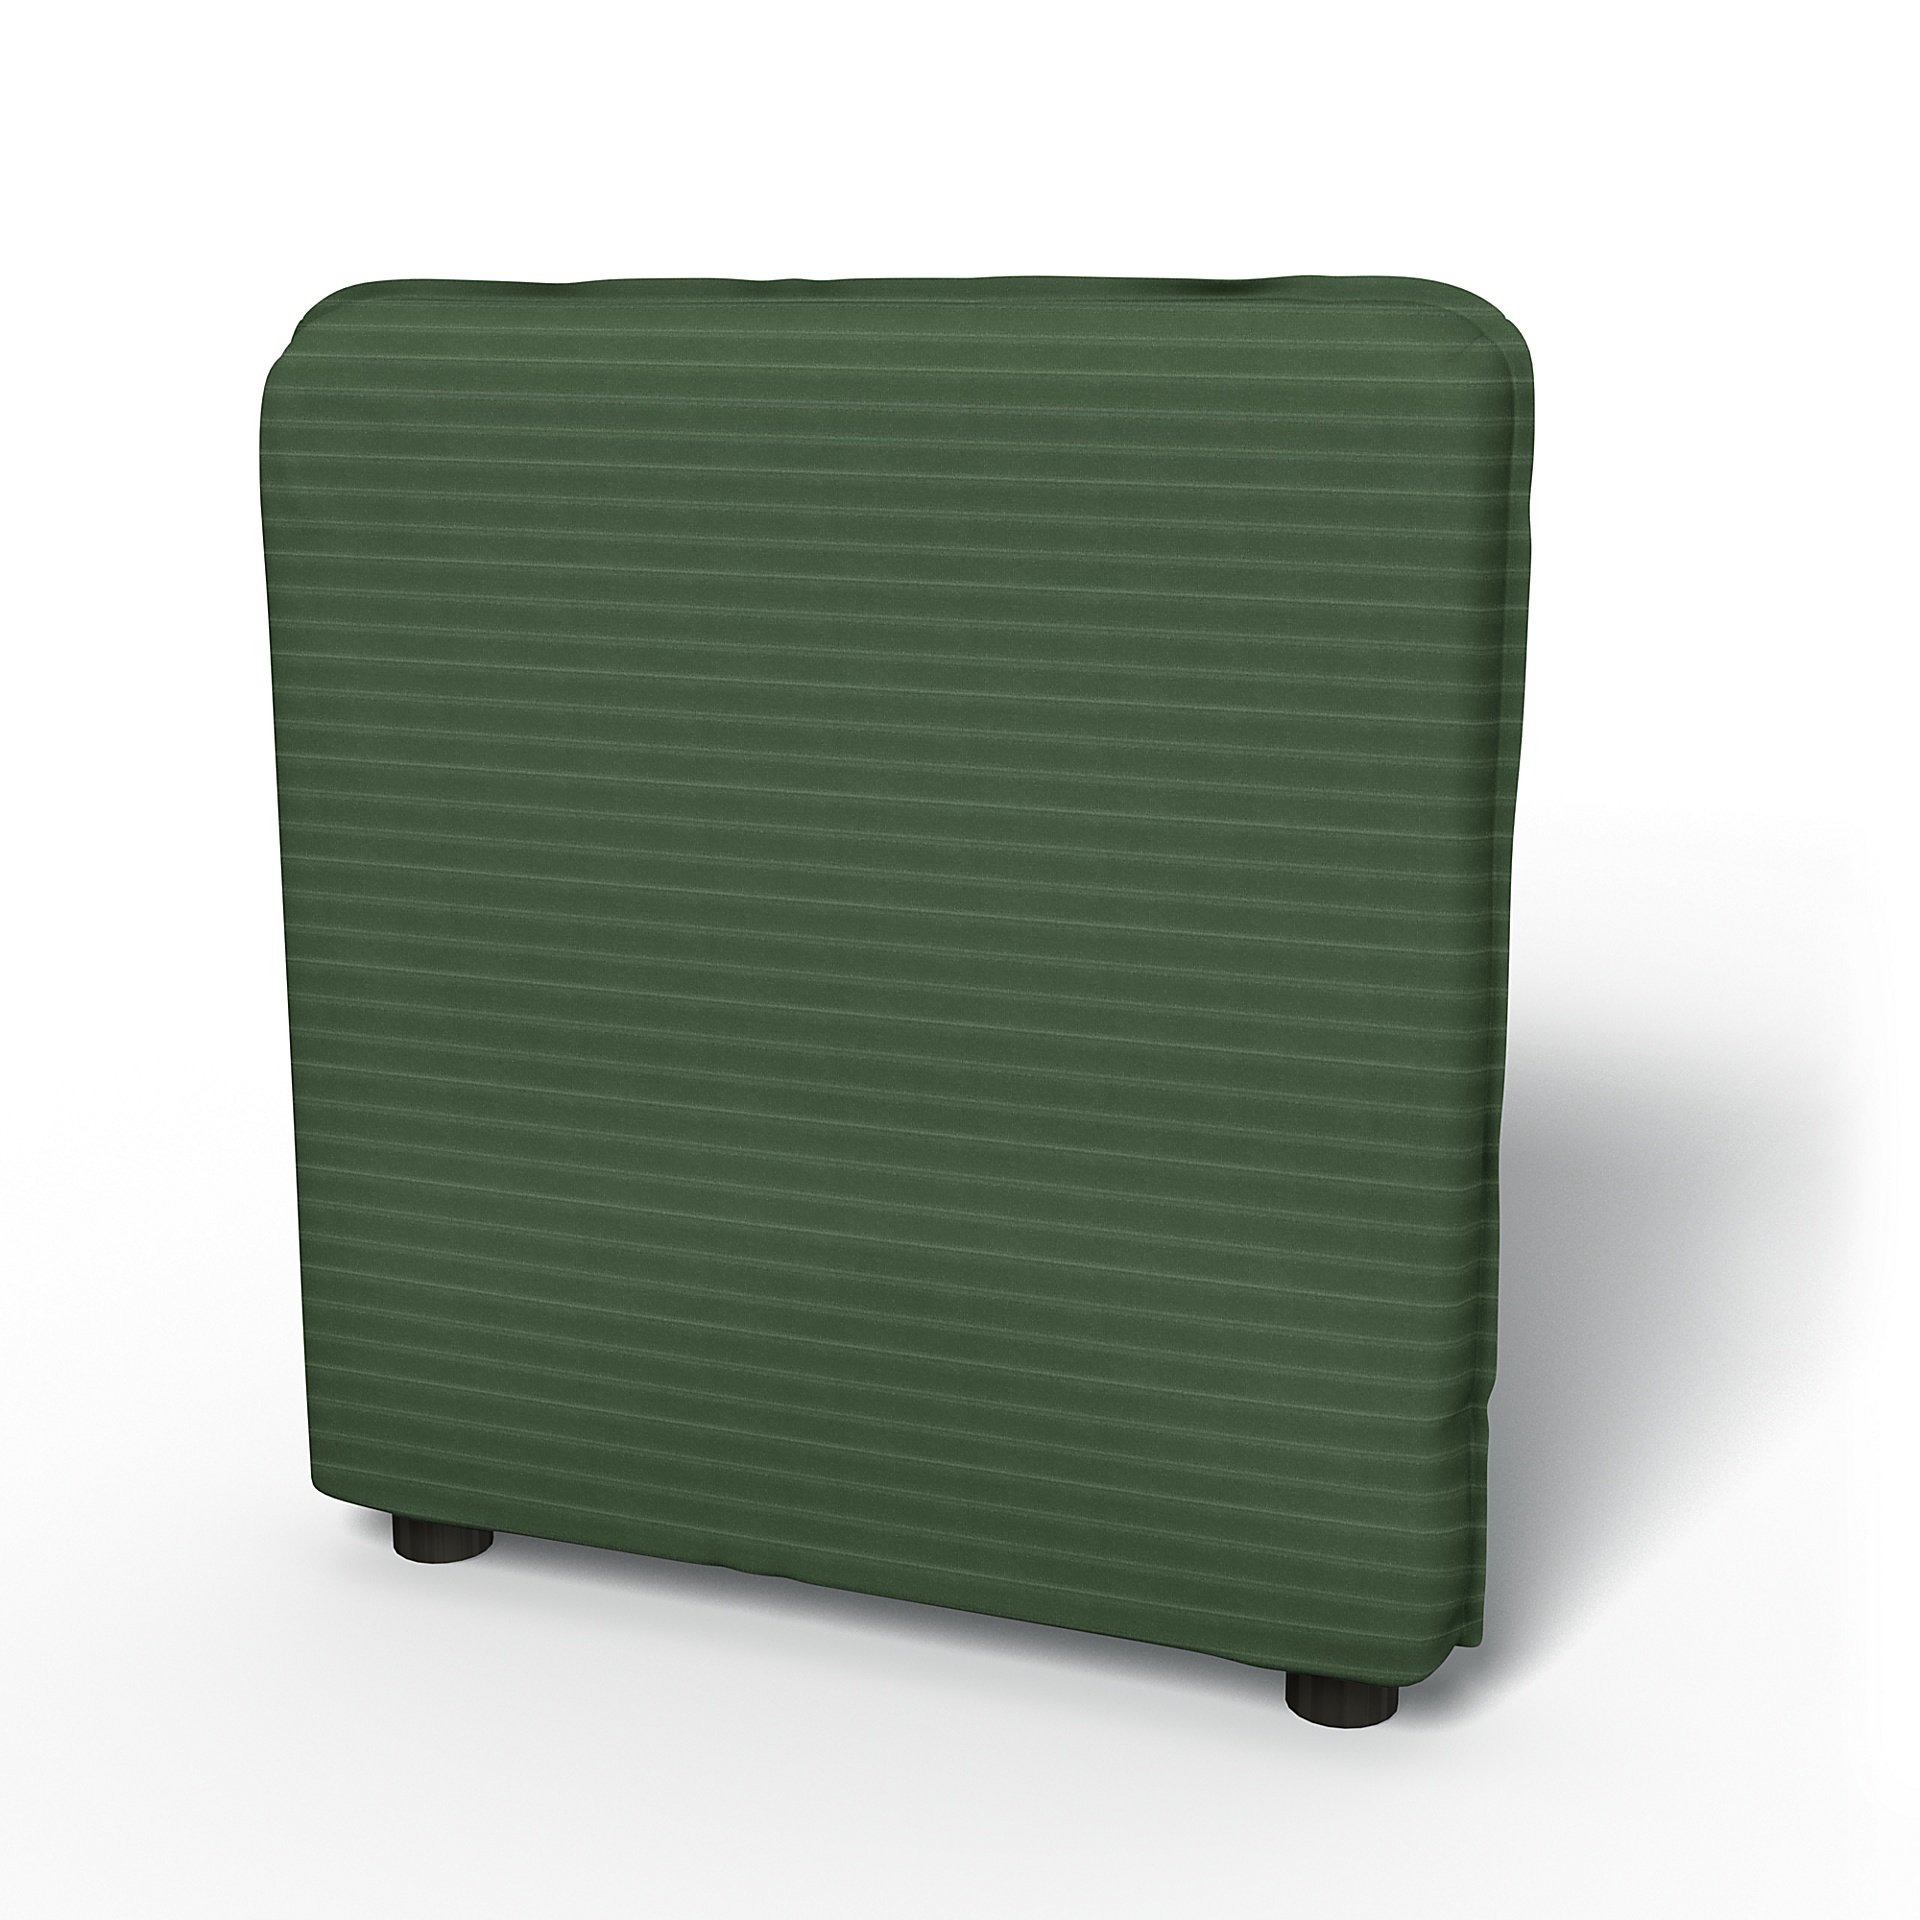 IKEA - Vallentuna Armrest Cover (80x60x13cm), Palm Green, Corduroy - Bemz